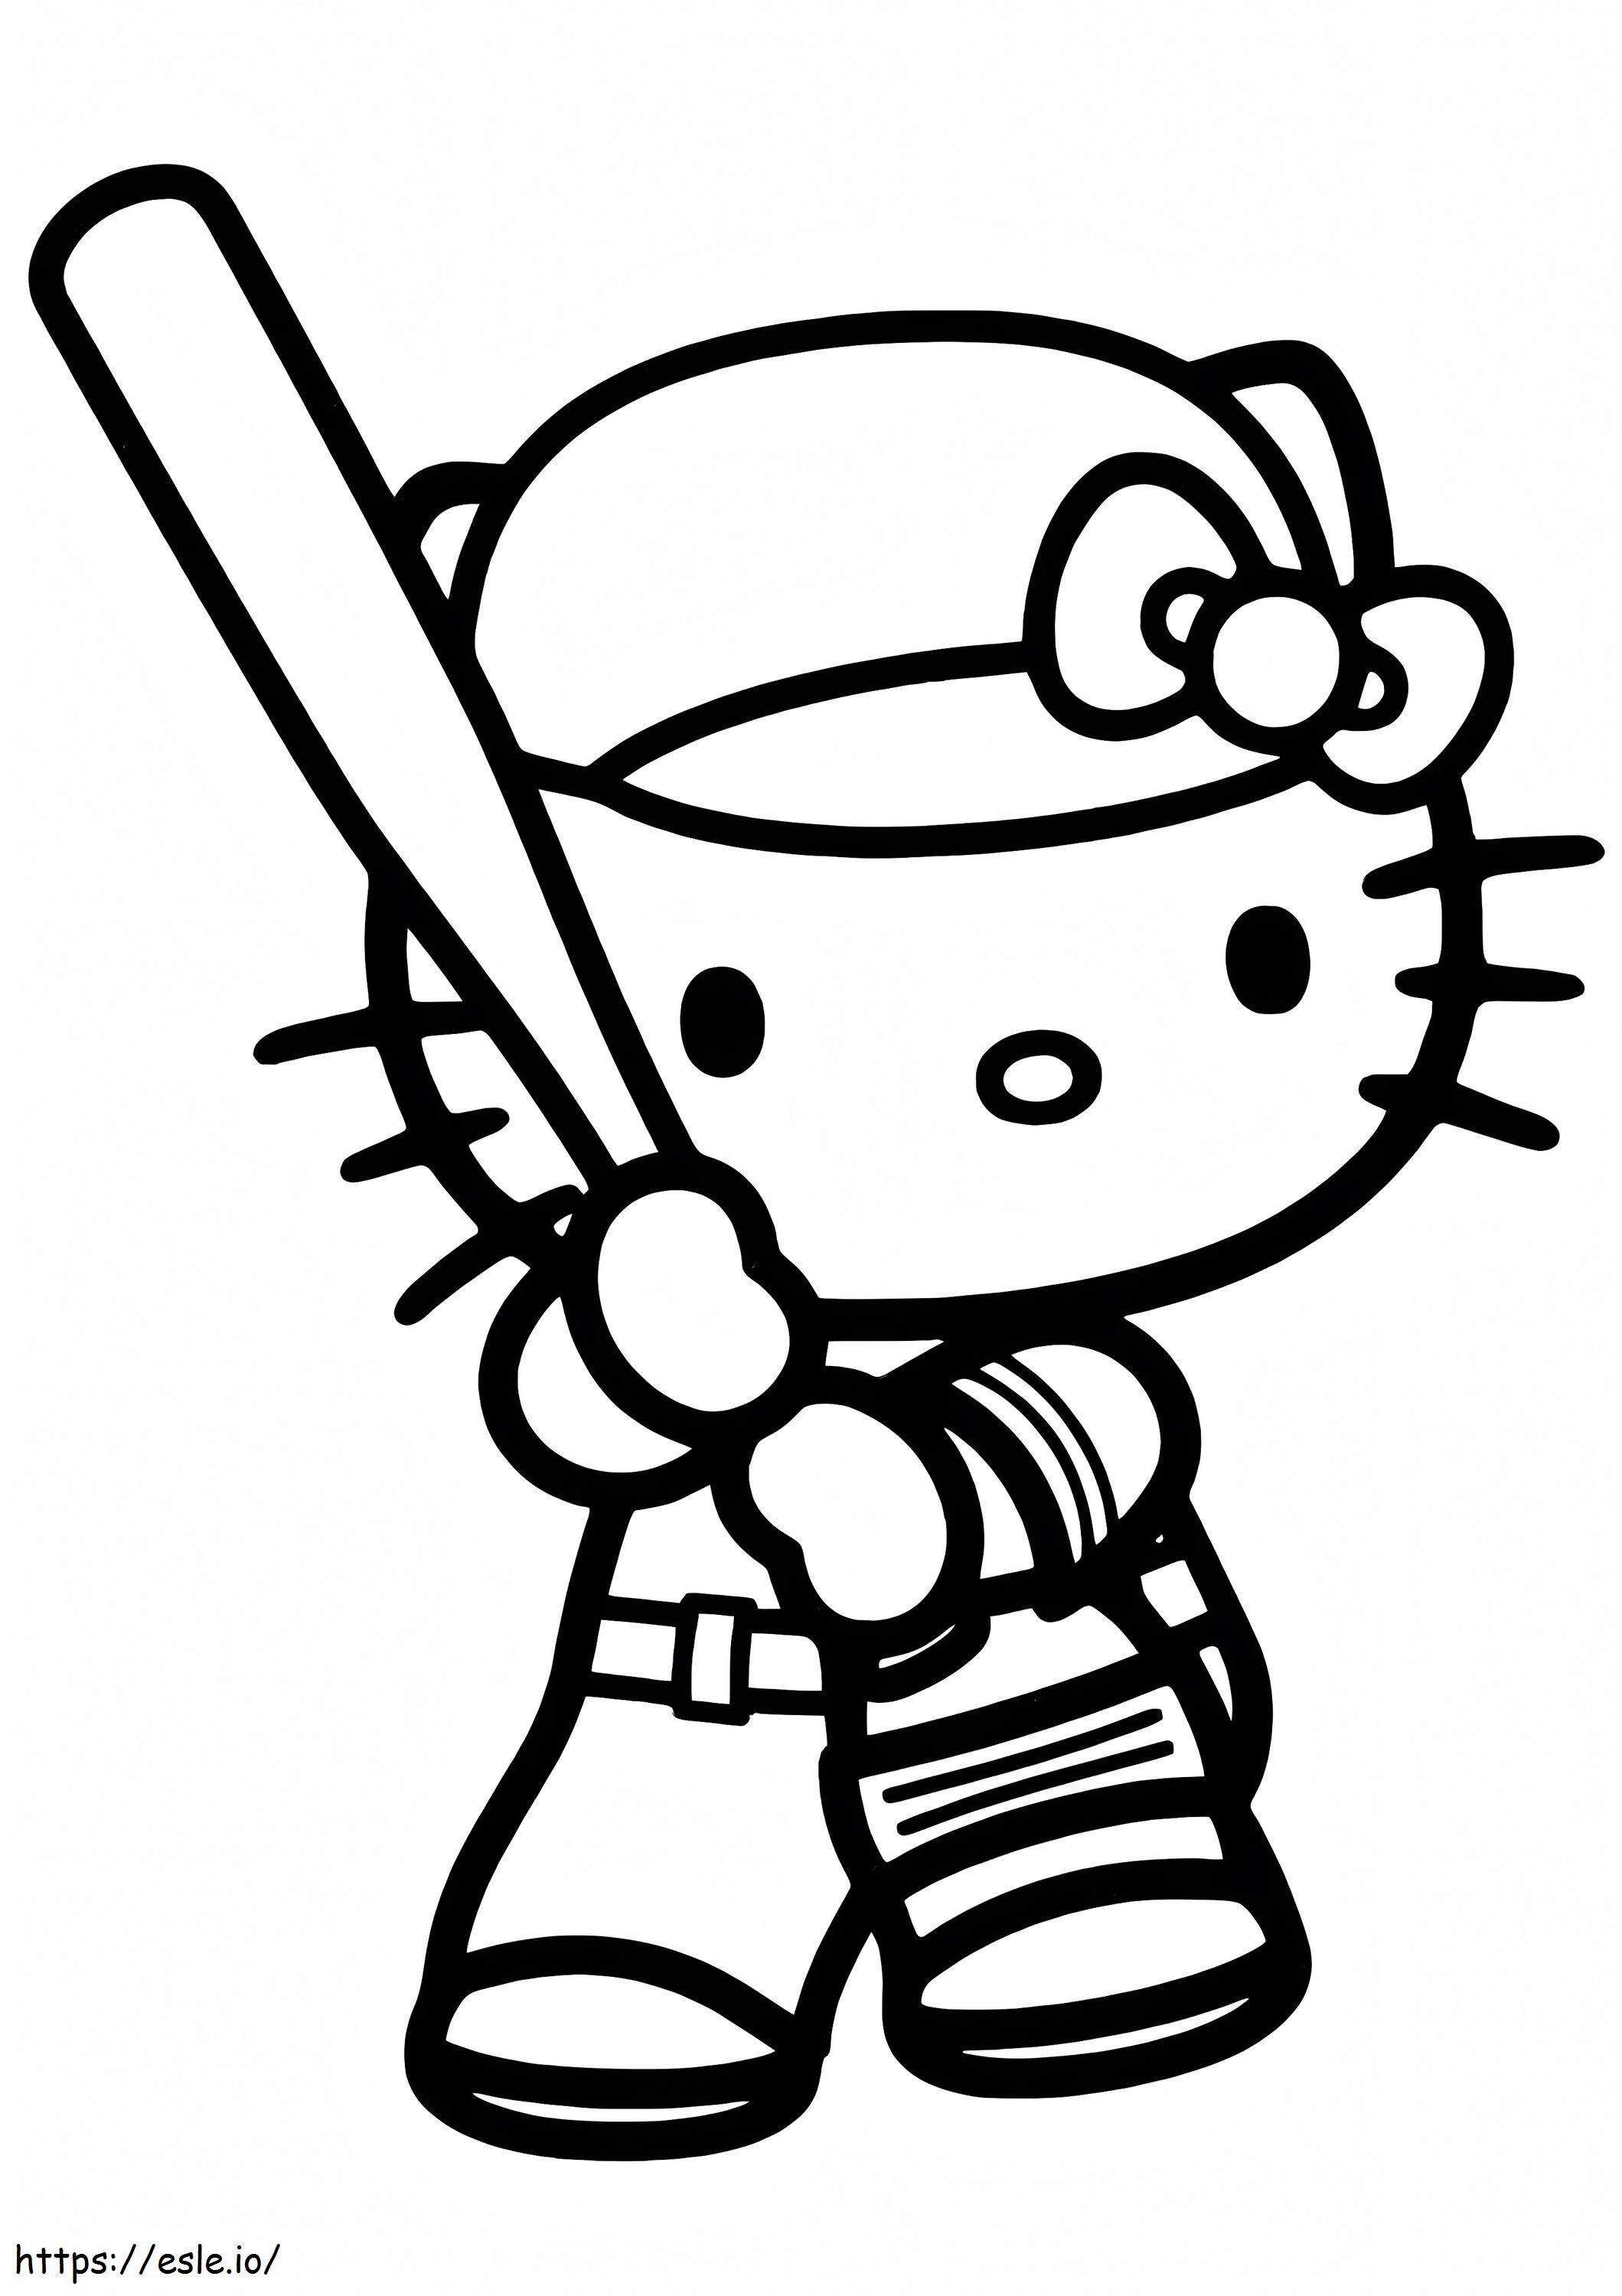 Coloriage Hello Kitty joue au softball à imprimer dessin